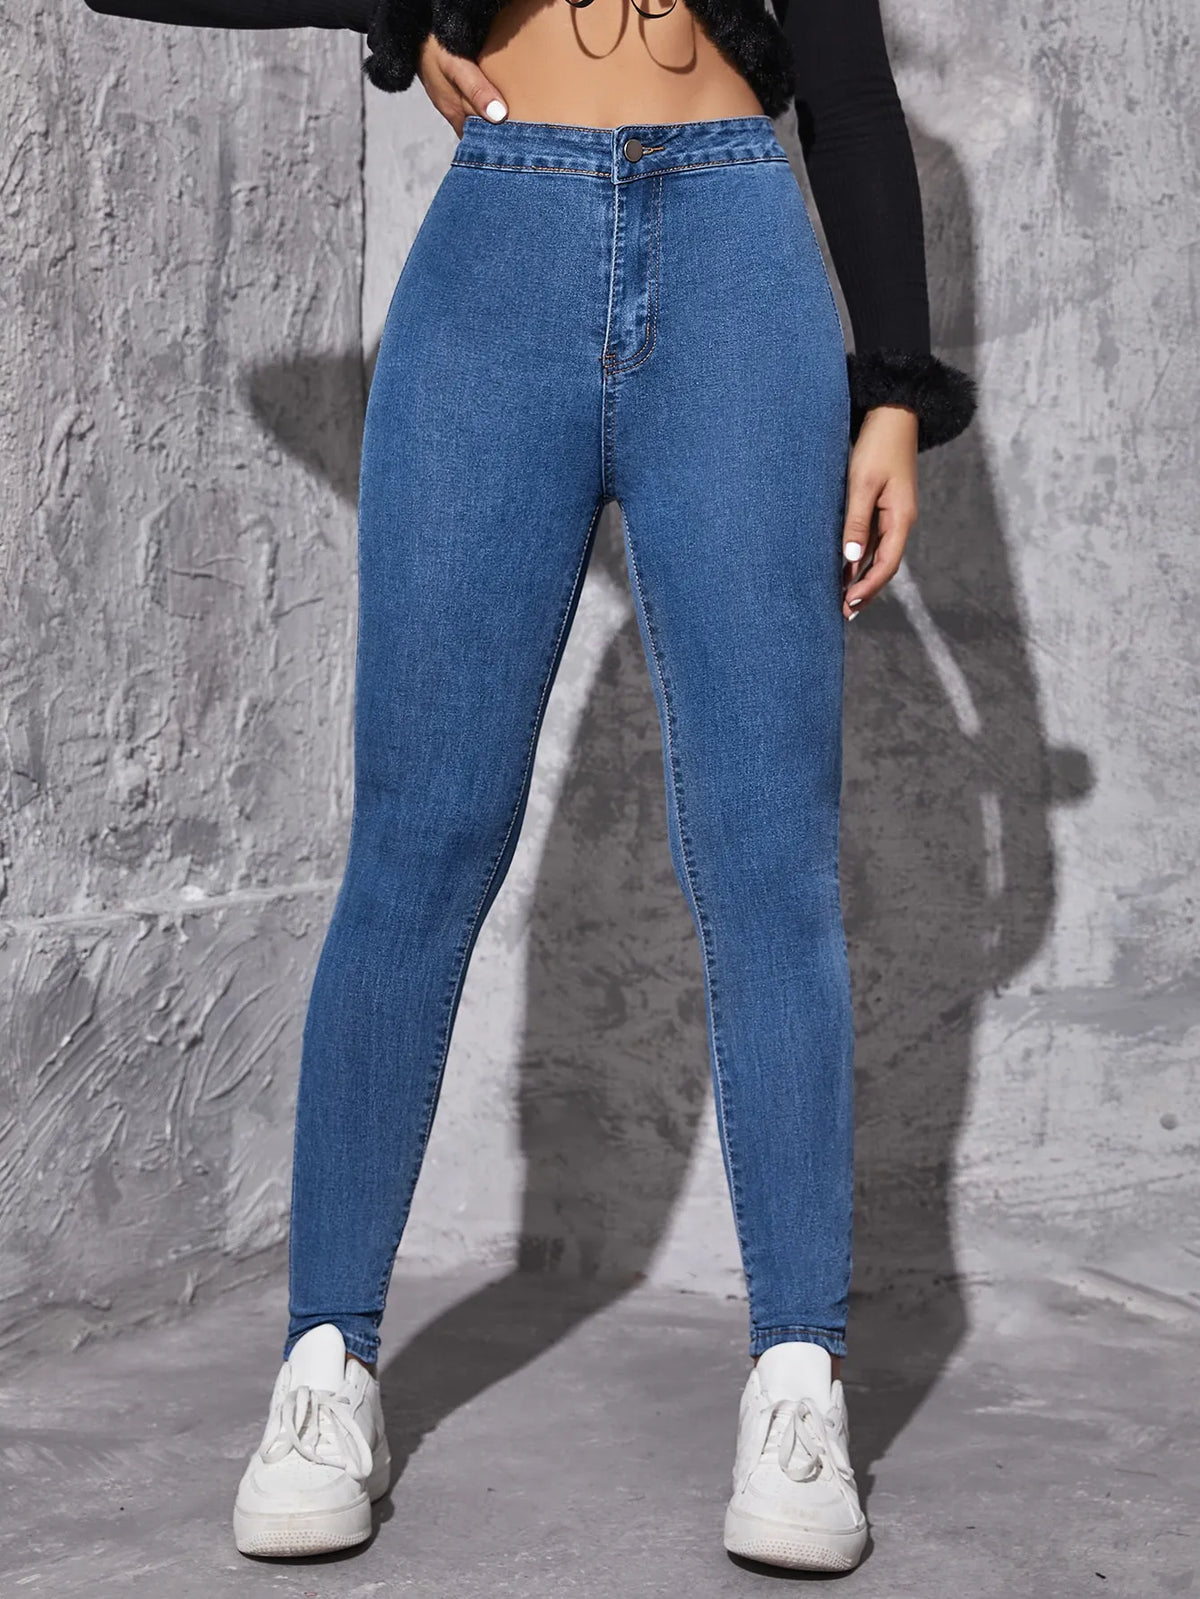 Calça Jeans Skinny Feminina Cintura Alta Lavagem Média